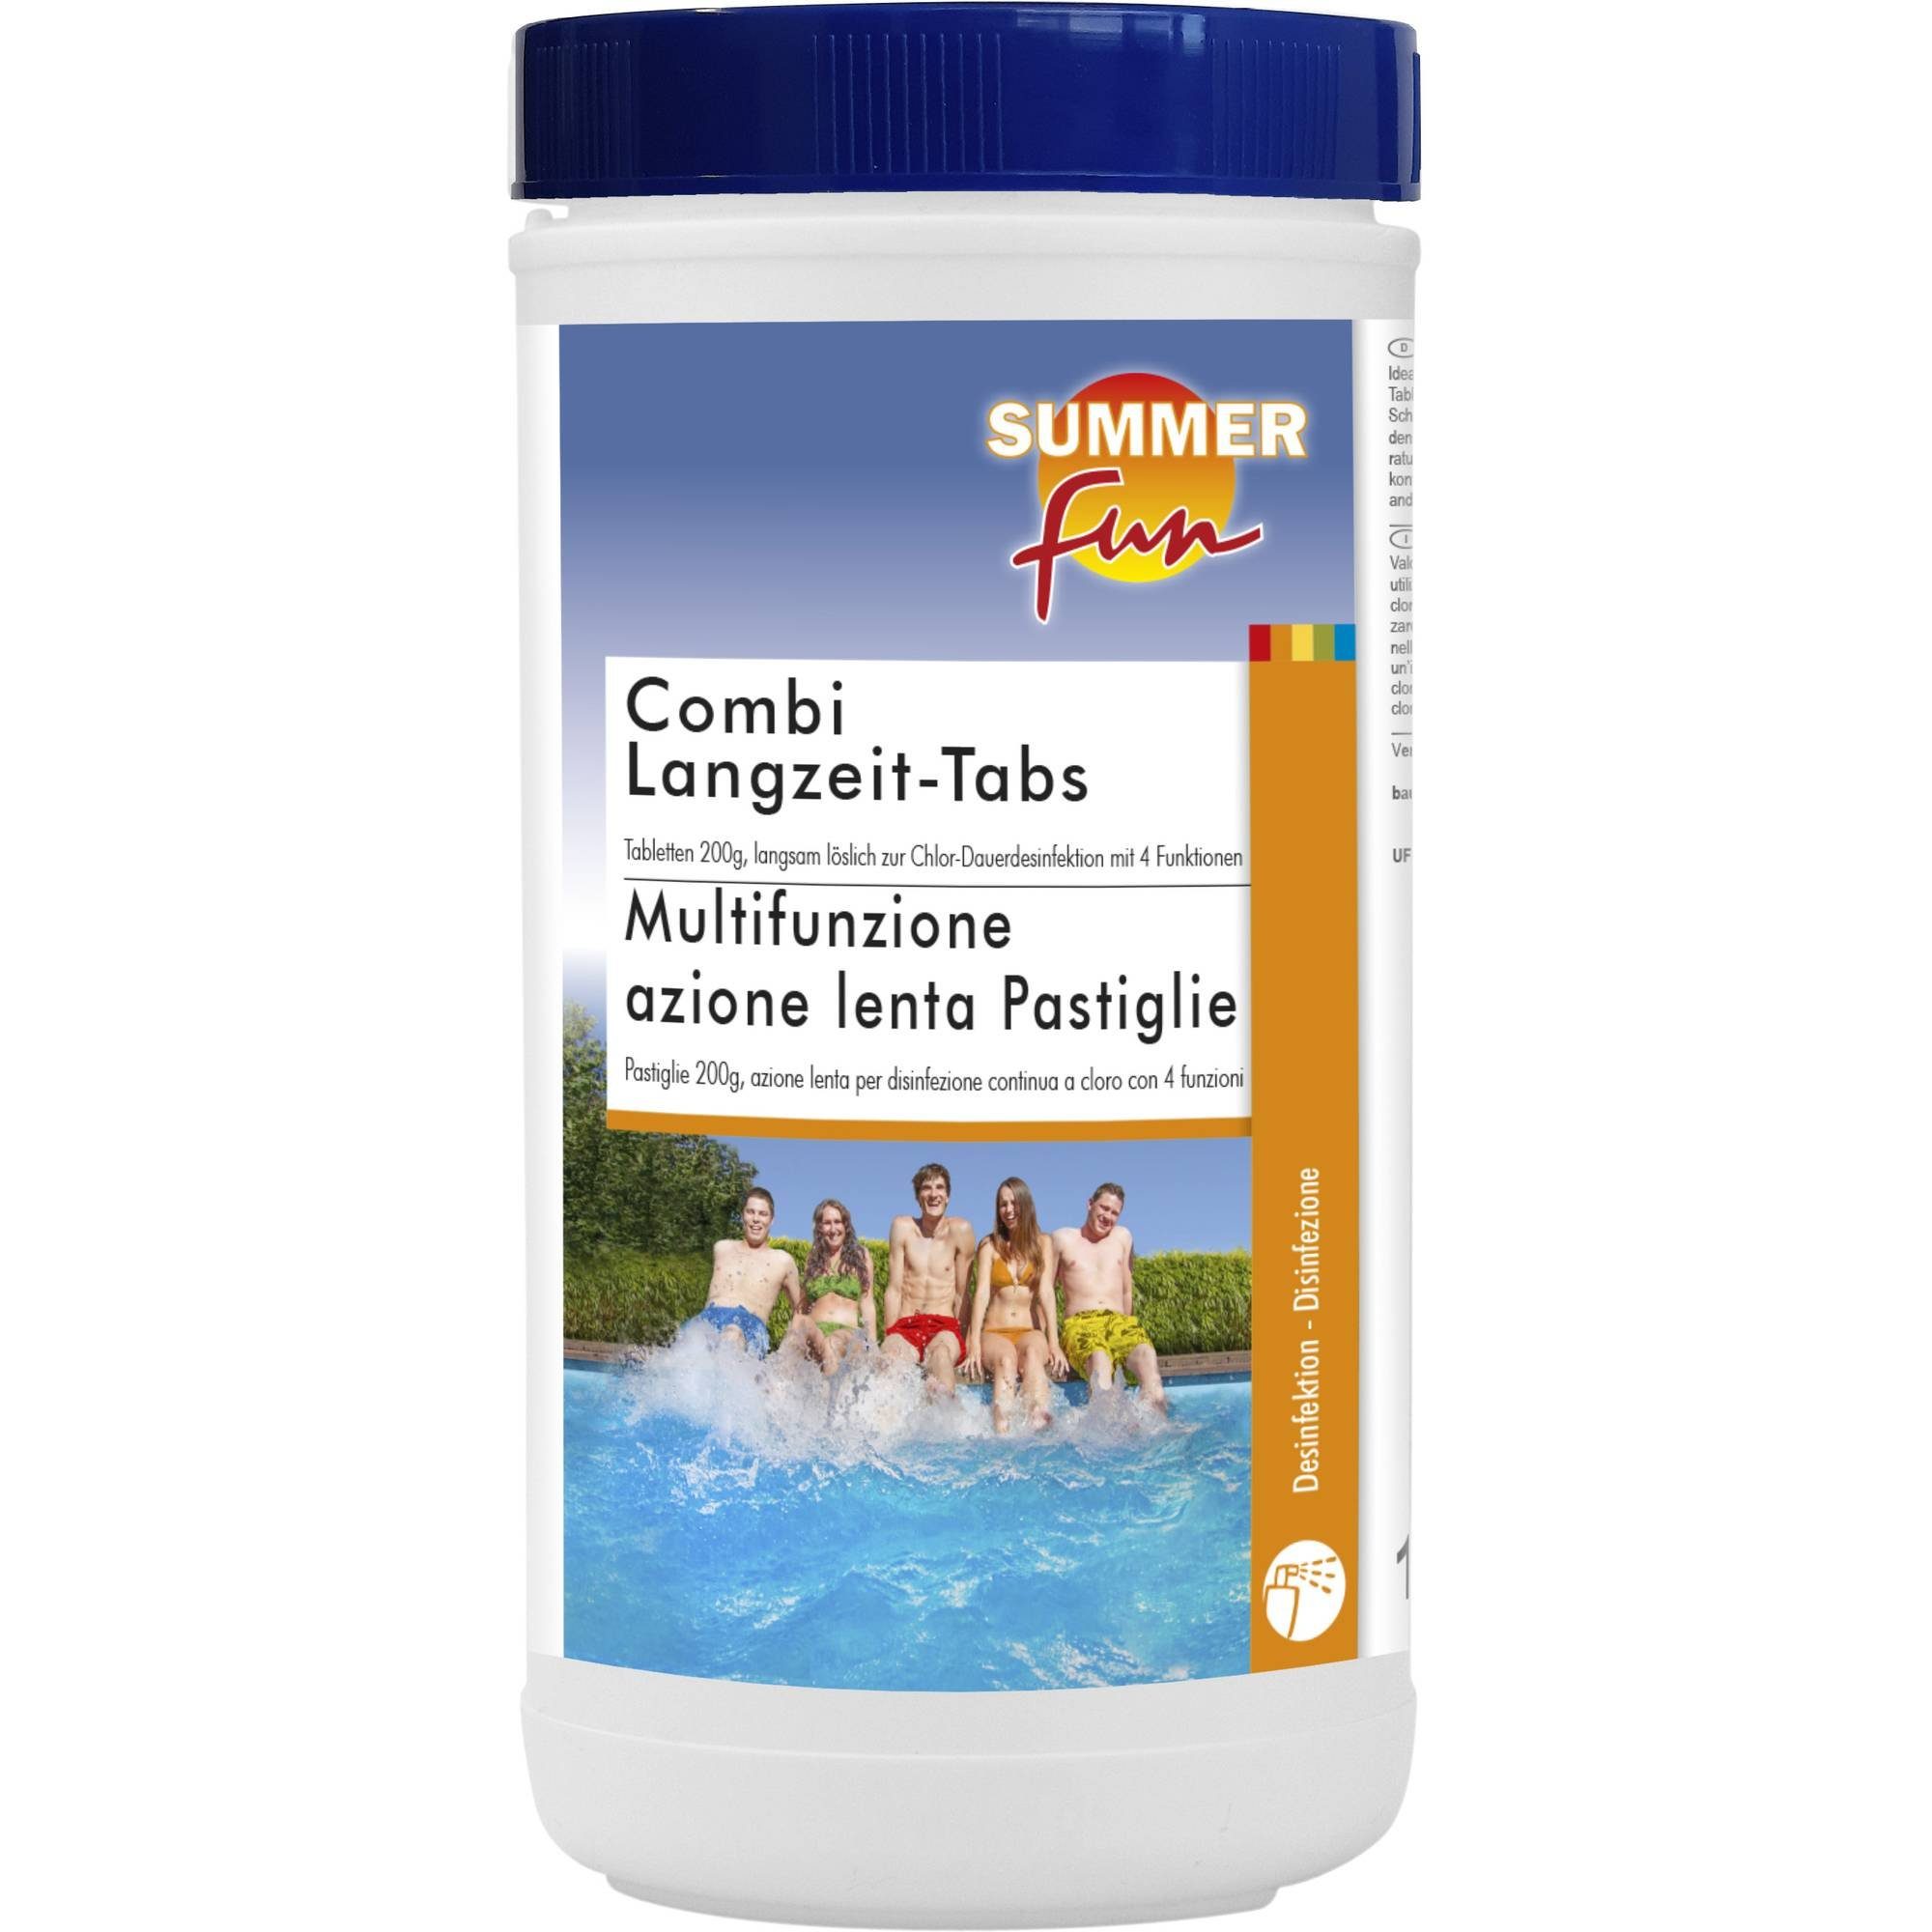 SUMMER FUN Poolpflege Summer Fun - Combi Langzeit-Tabs - 200g Tabletten